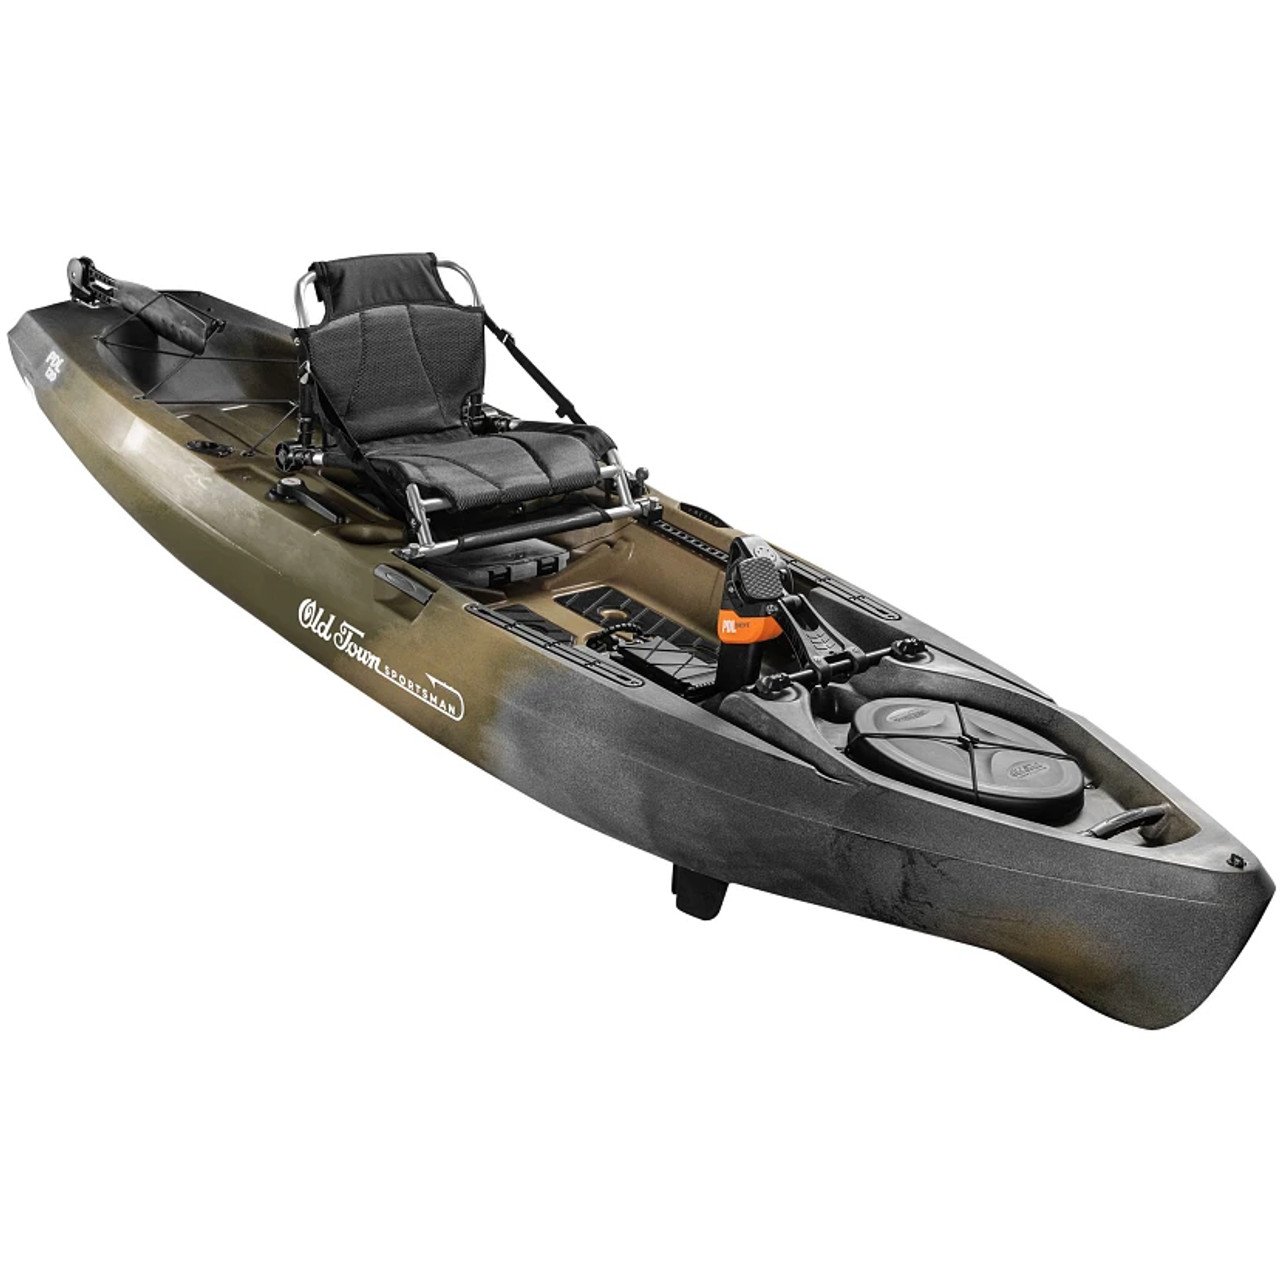 85 Kayak fishing ideas  kayak fishing, kayaking, kayak accessories